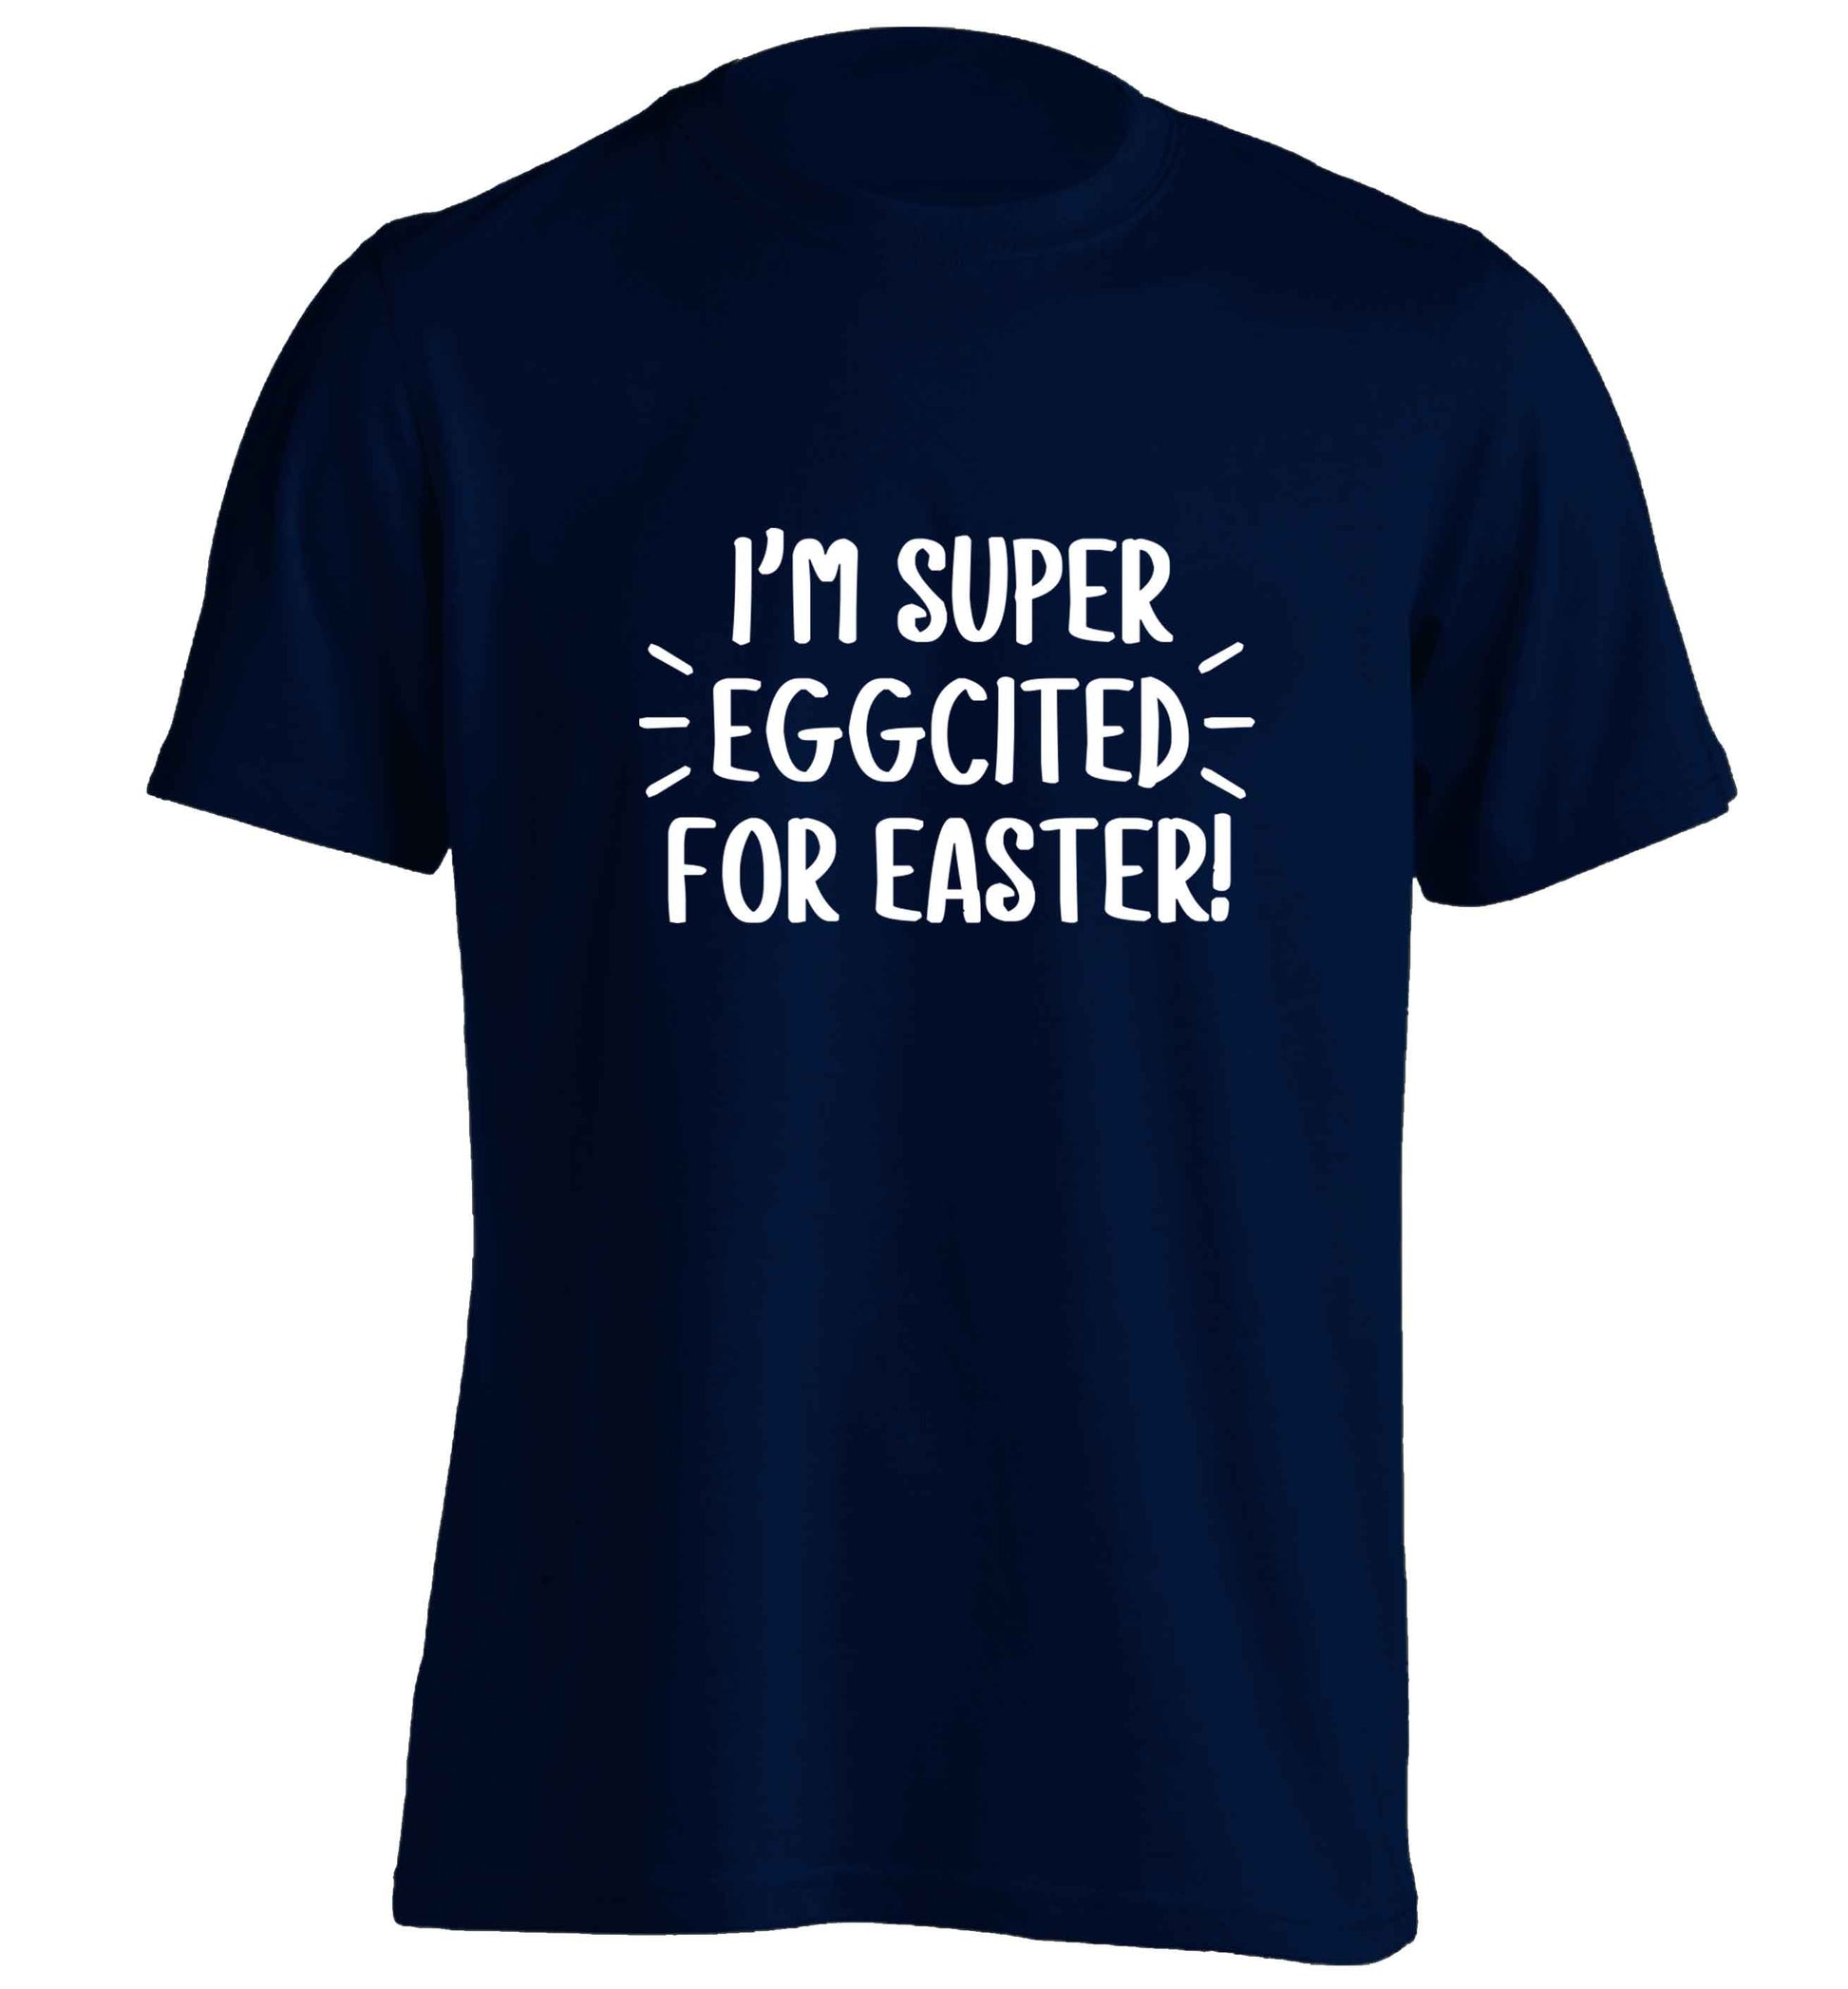 I'm super eggcited for Easter adults unisex navy Tshirt 2XL